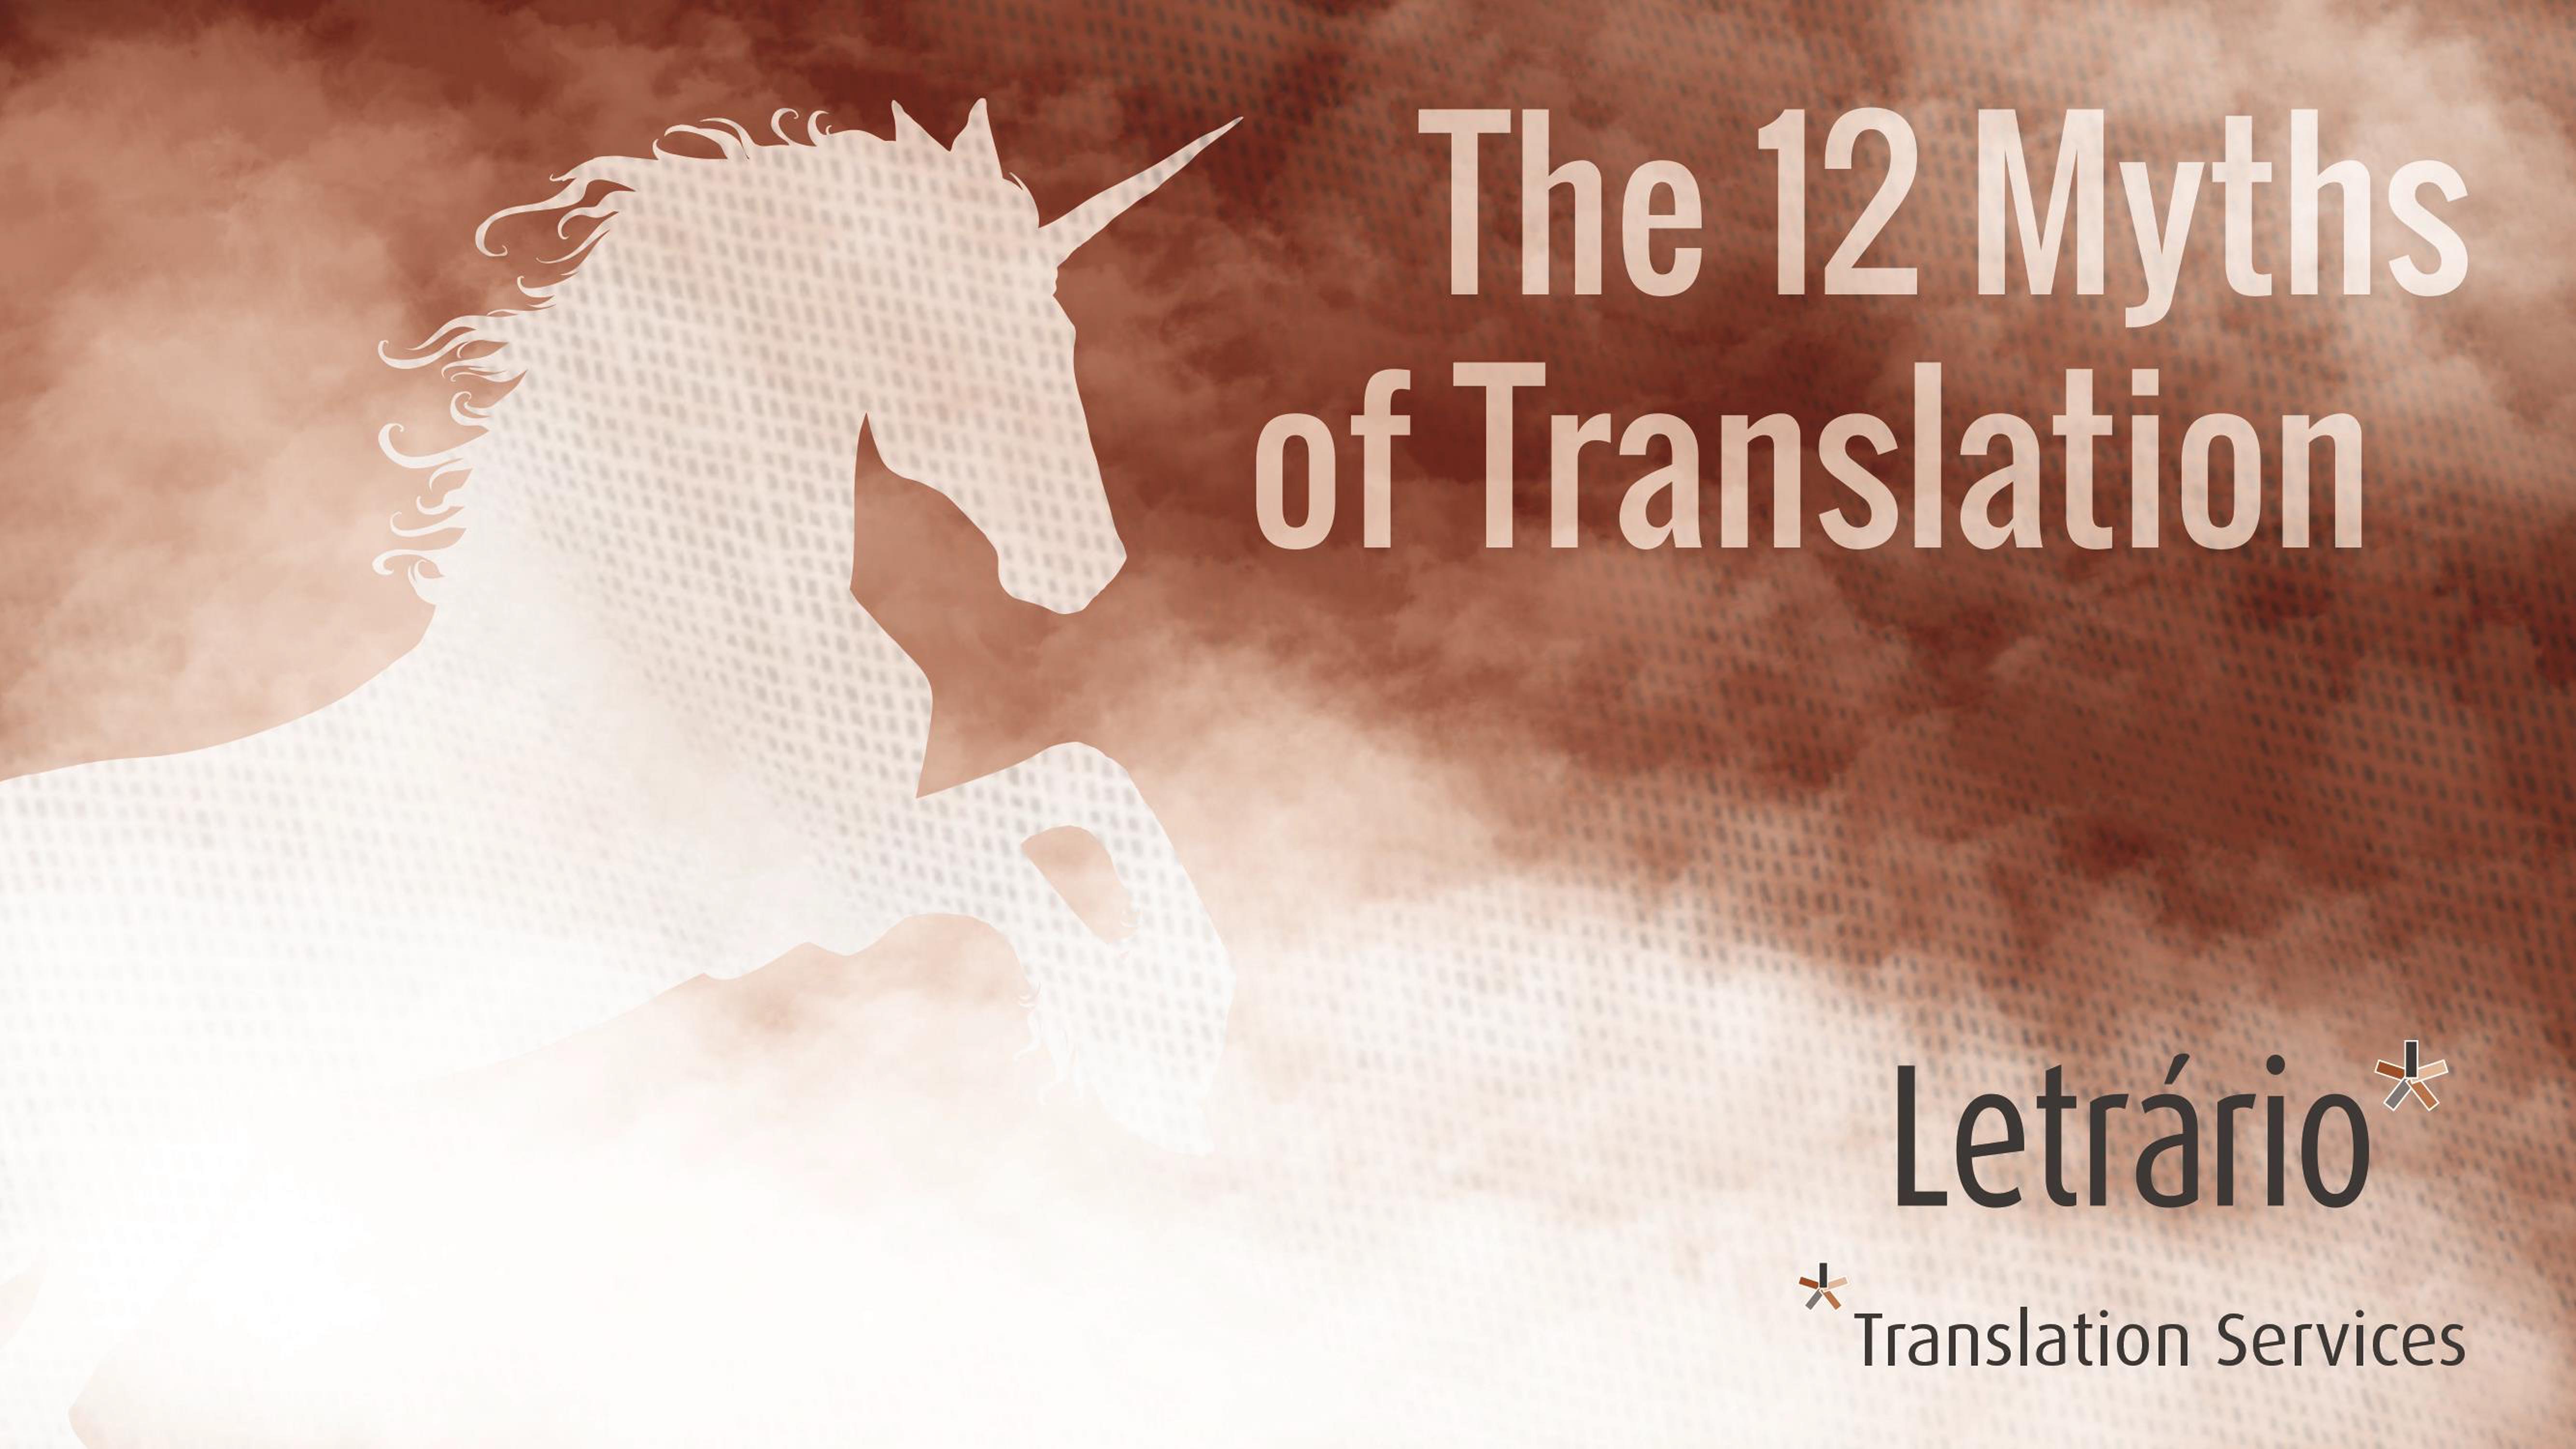 The 12 Myths of Translation